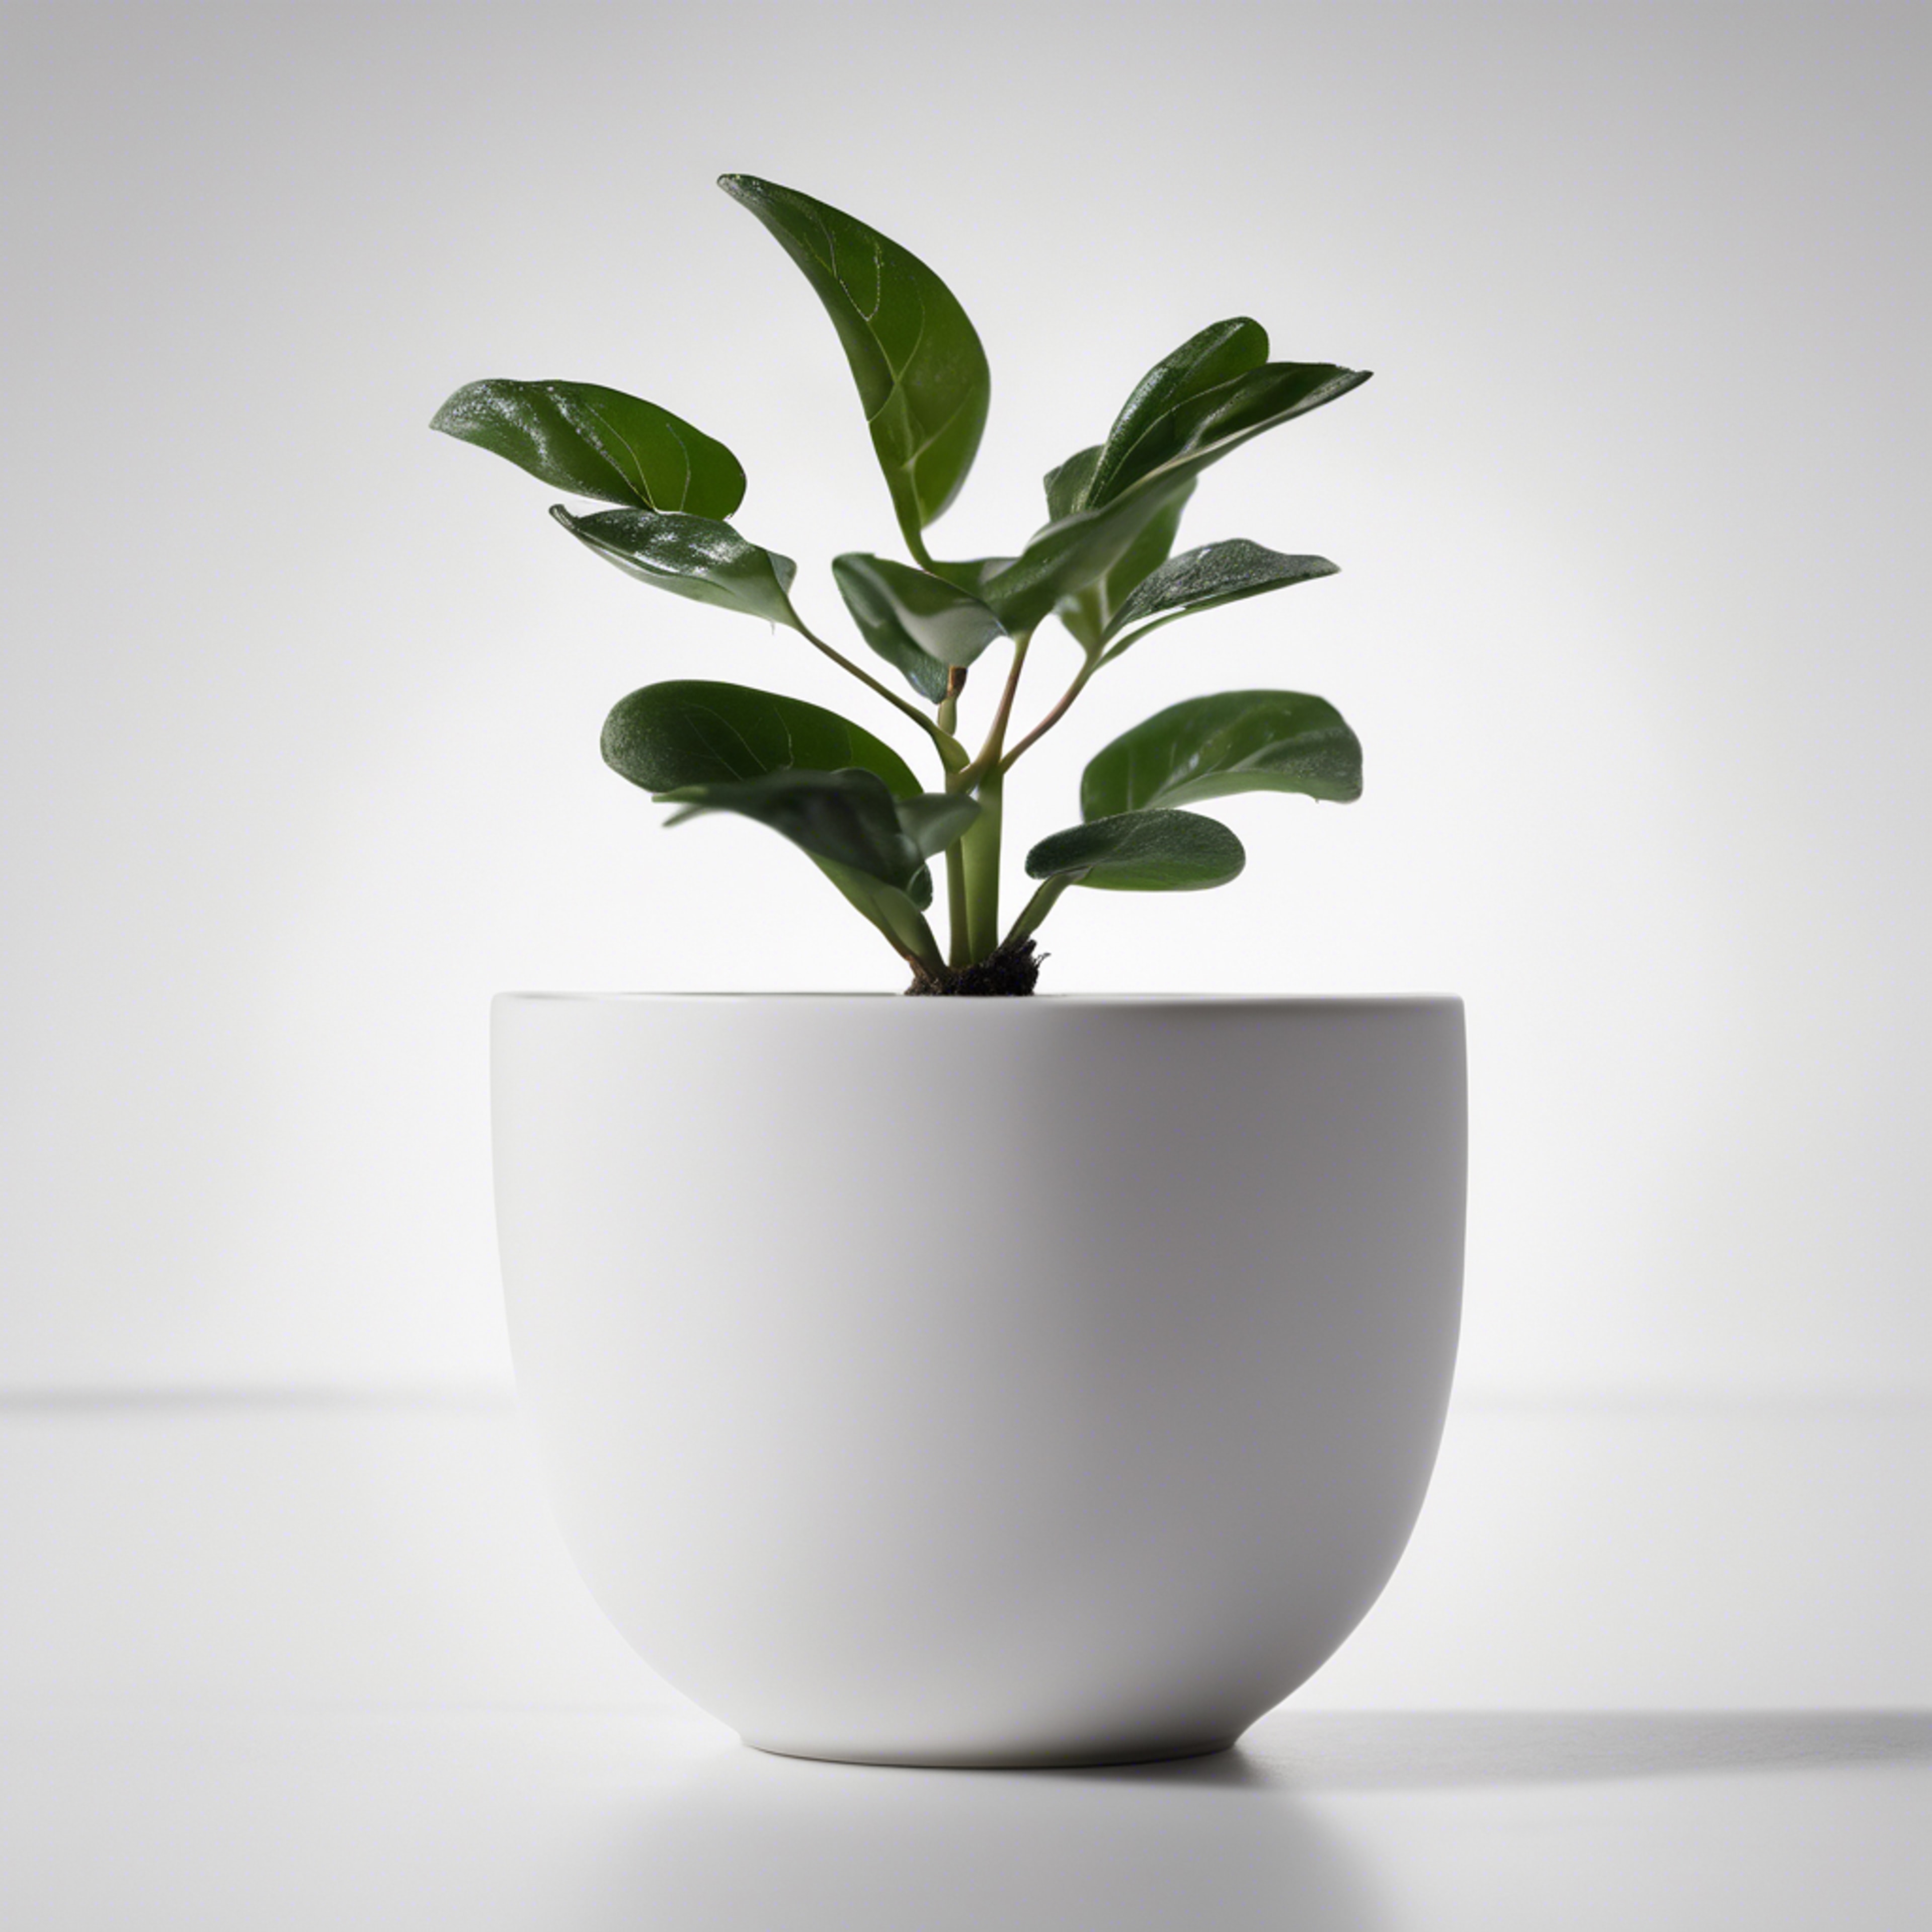 Small plant in a simple white ceramic pot against a minimalist white backdrop. Papel de parede[a9b2ed4c340742d2b1fd]